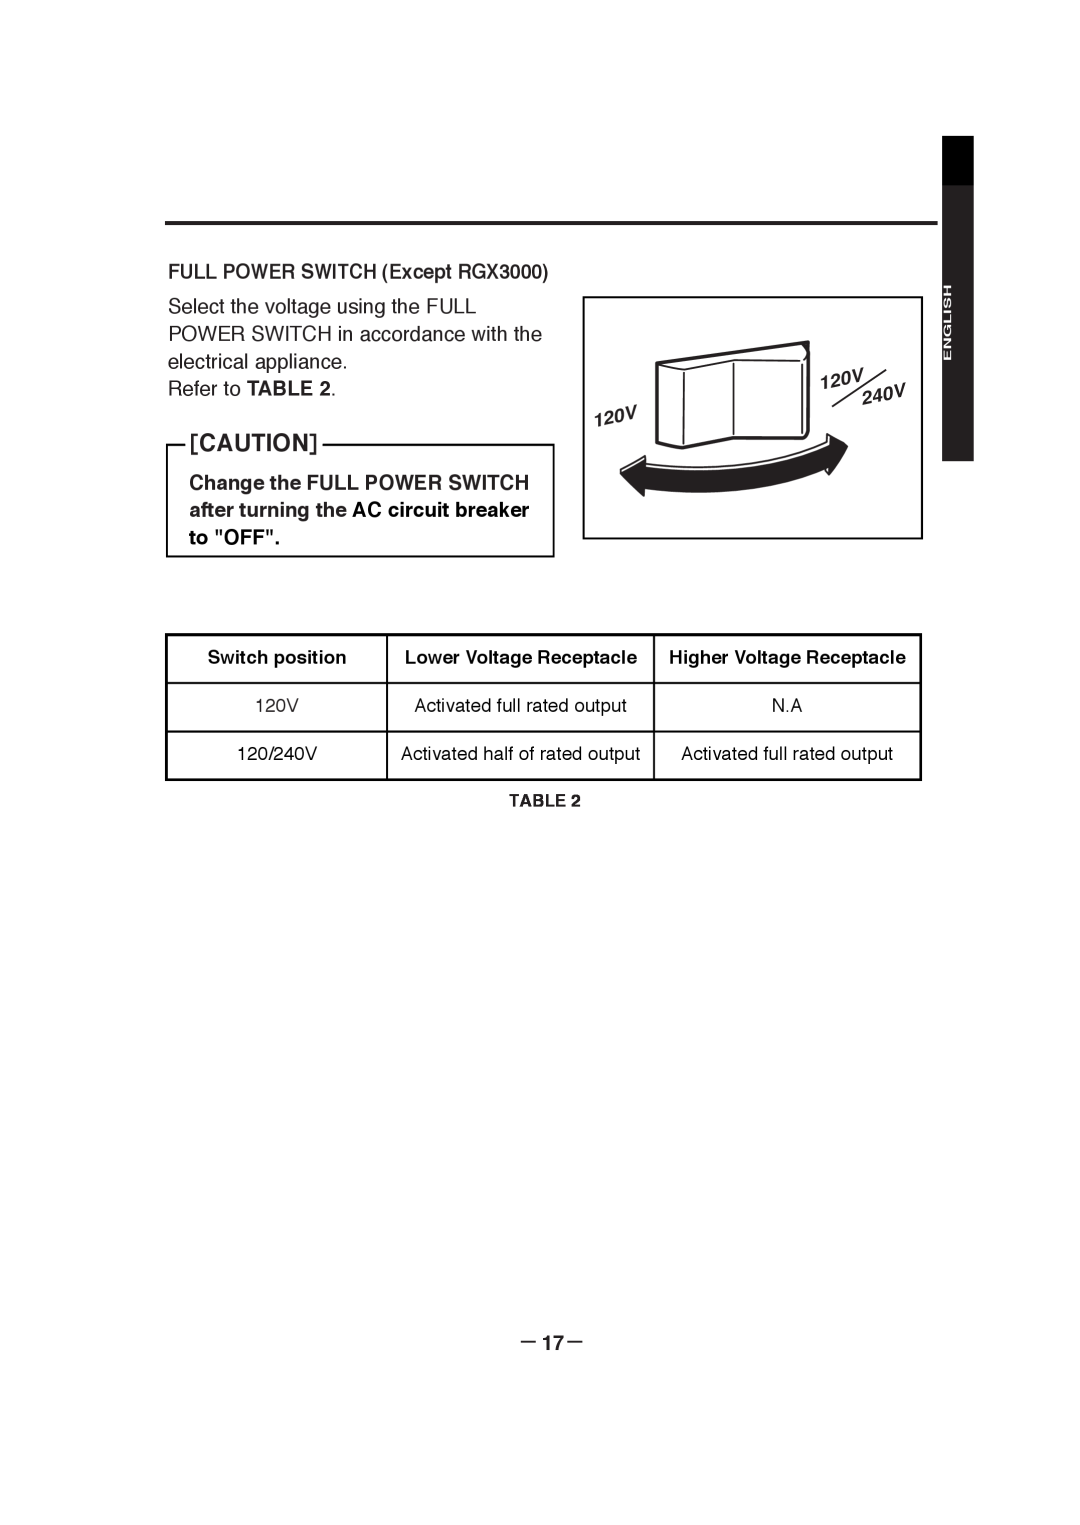 Subaru RGX3800 manual － 17－, ［Caution］, 120V, Switch position, Lower Voltage Receptacle, Higher Voltage Receptacle, English 